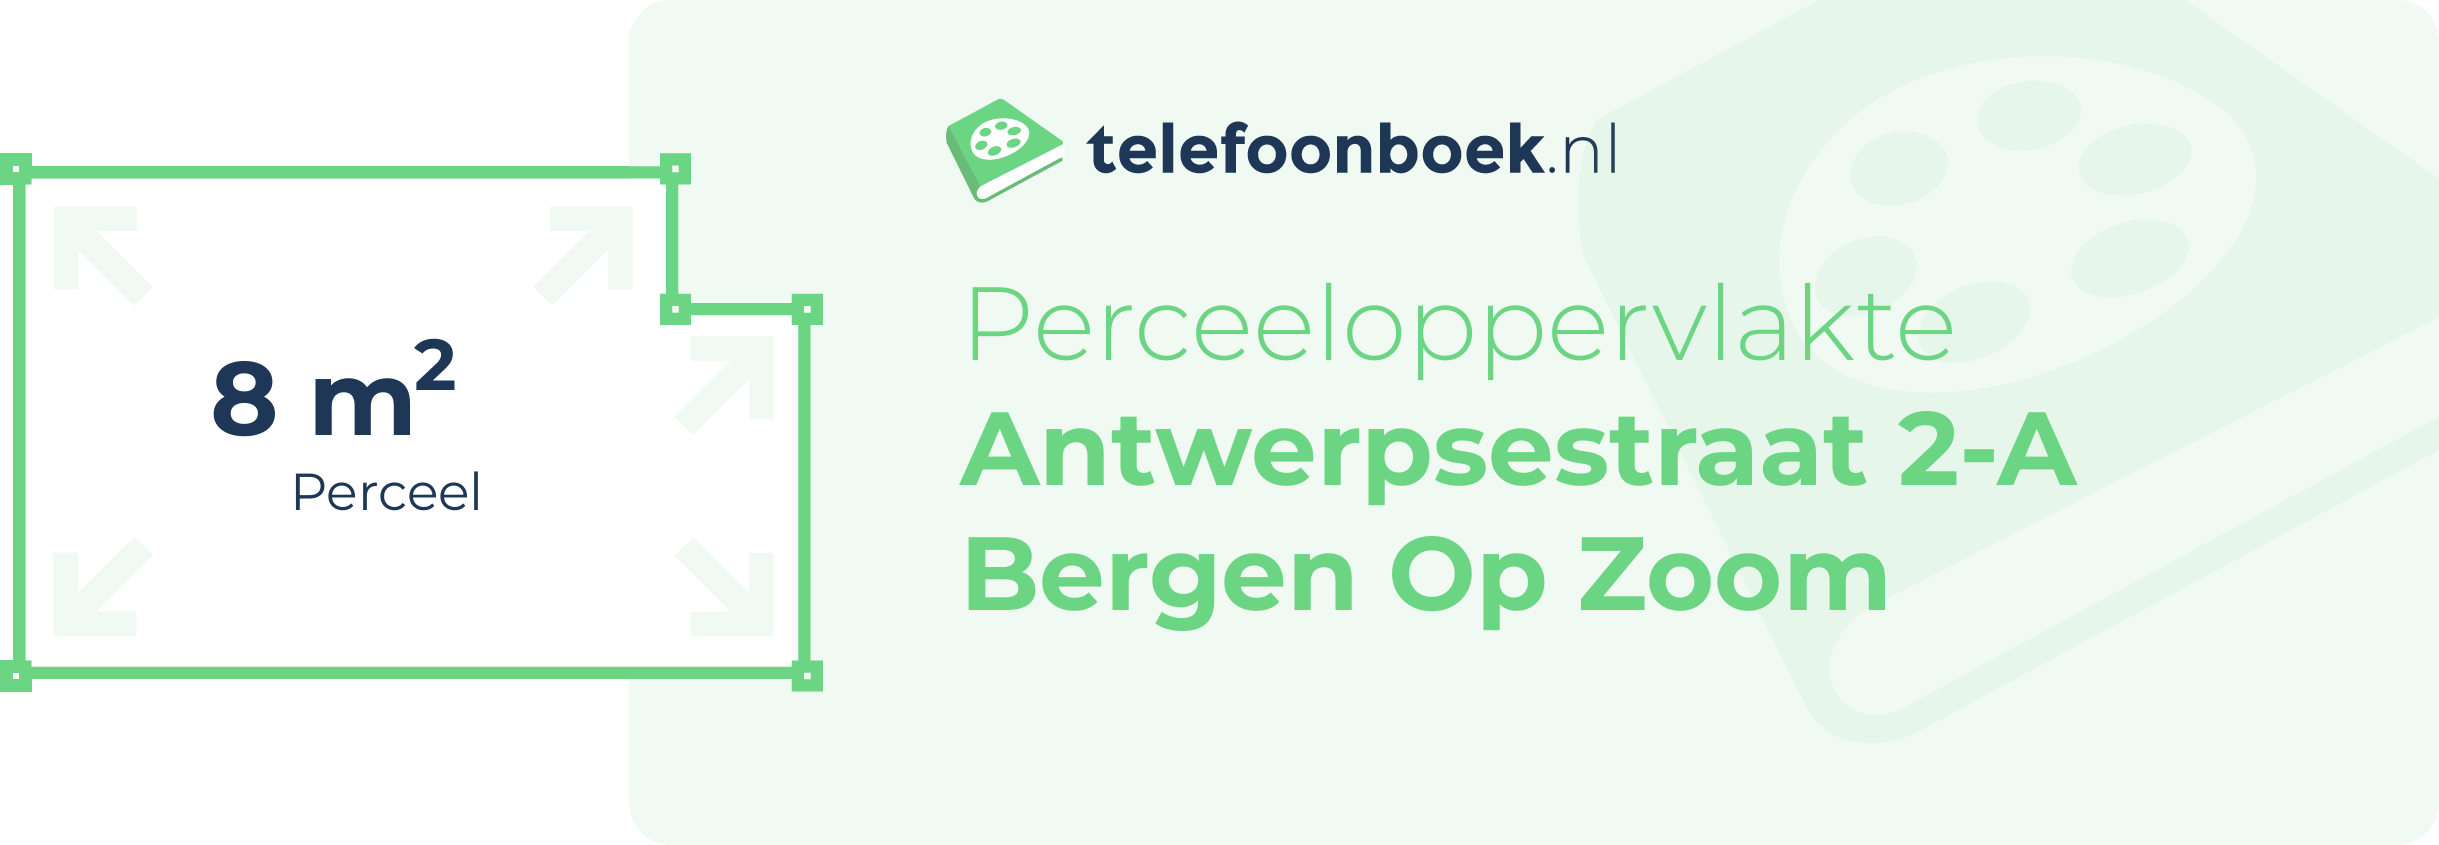 Perceeloppervlakte Antwerpsestraat 2-A Bergen Op Zoom